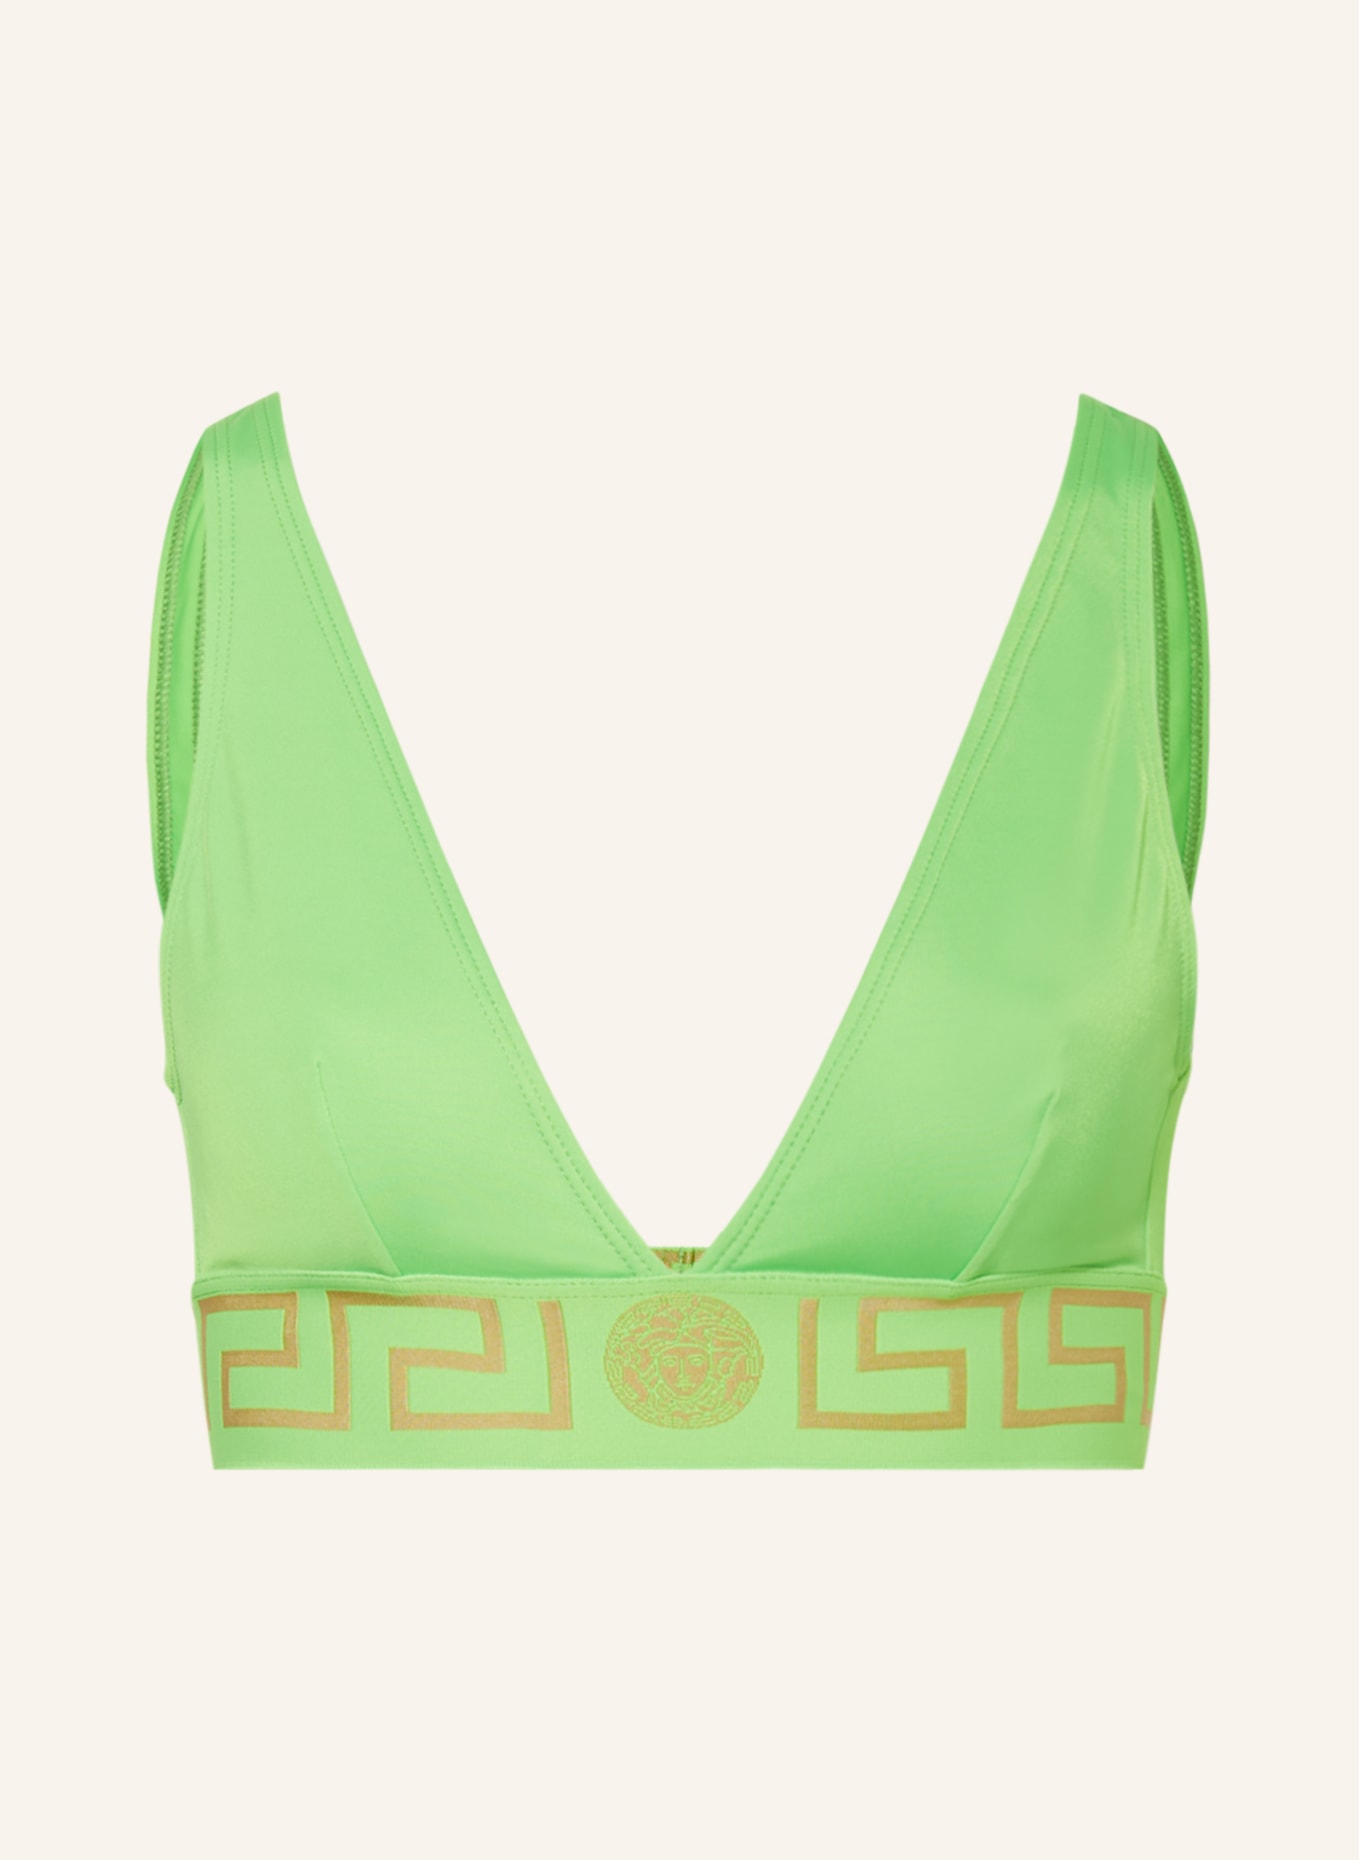 VERSACE Bralette bikini top in neon green